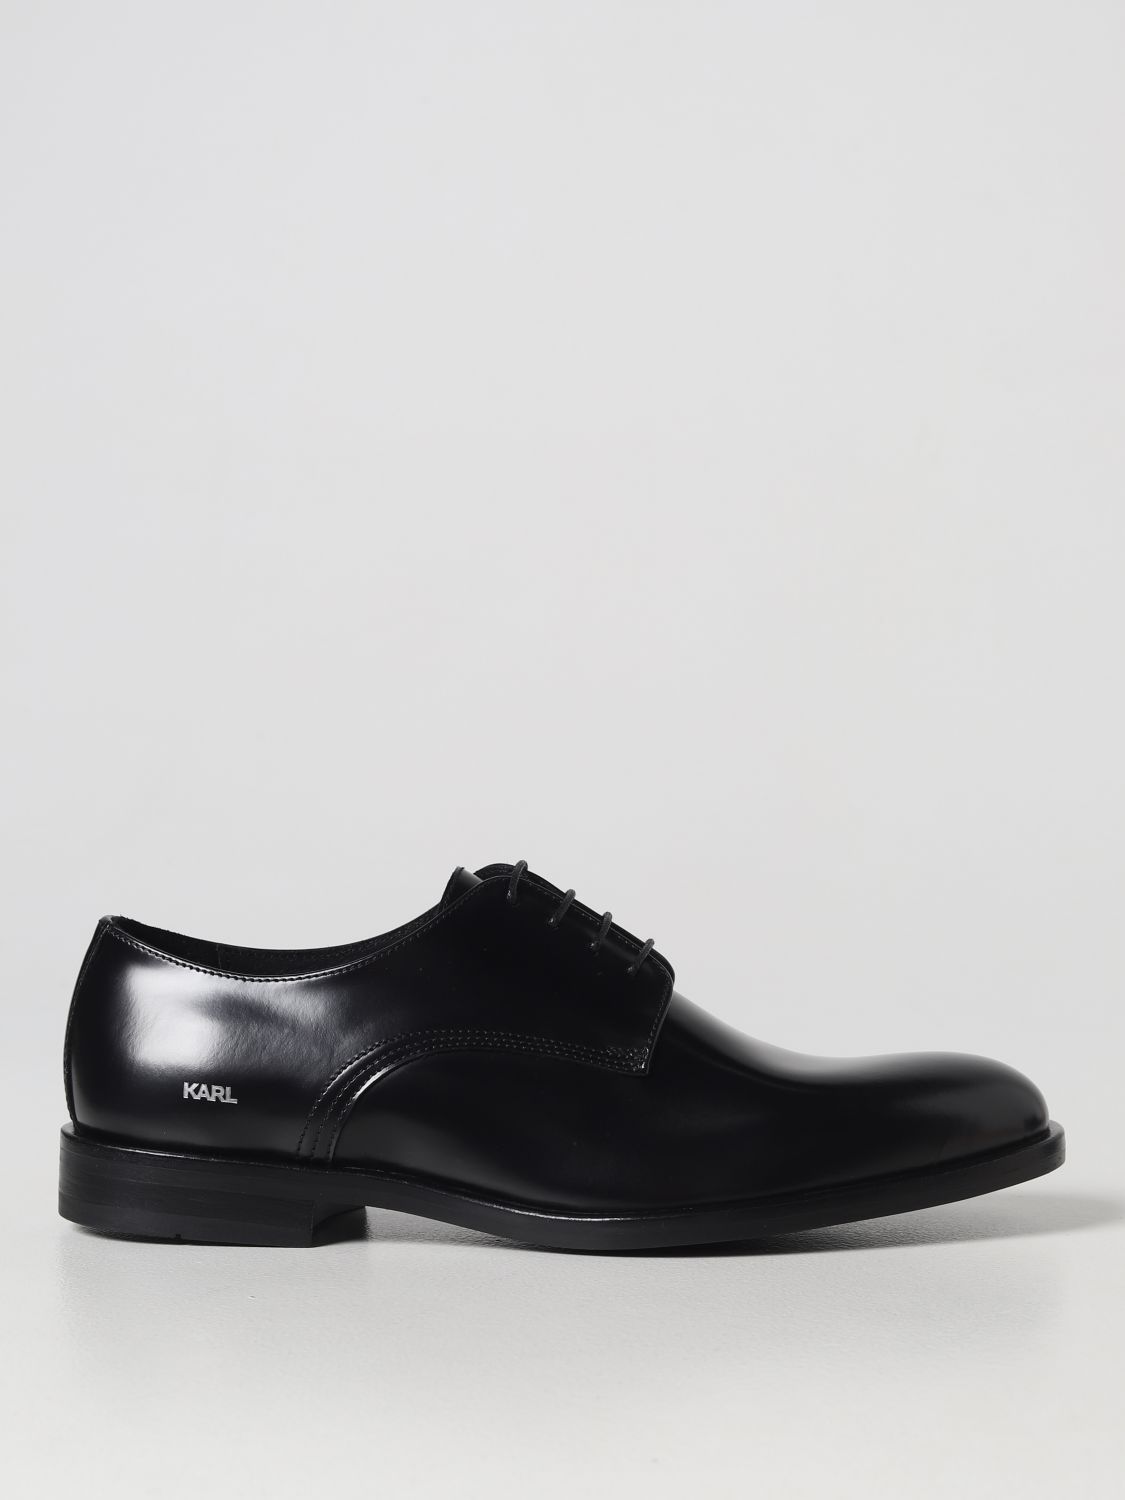 Depressie plotseling Conform KARL LAGERFELD: brogue shoes for man - Black | Karl Lagerfeld brogue shoes  KL12224 online on GIGLIO.COM